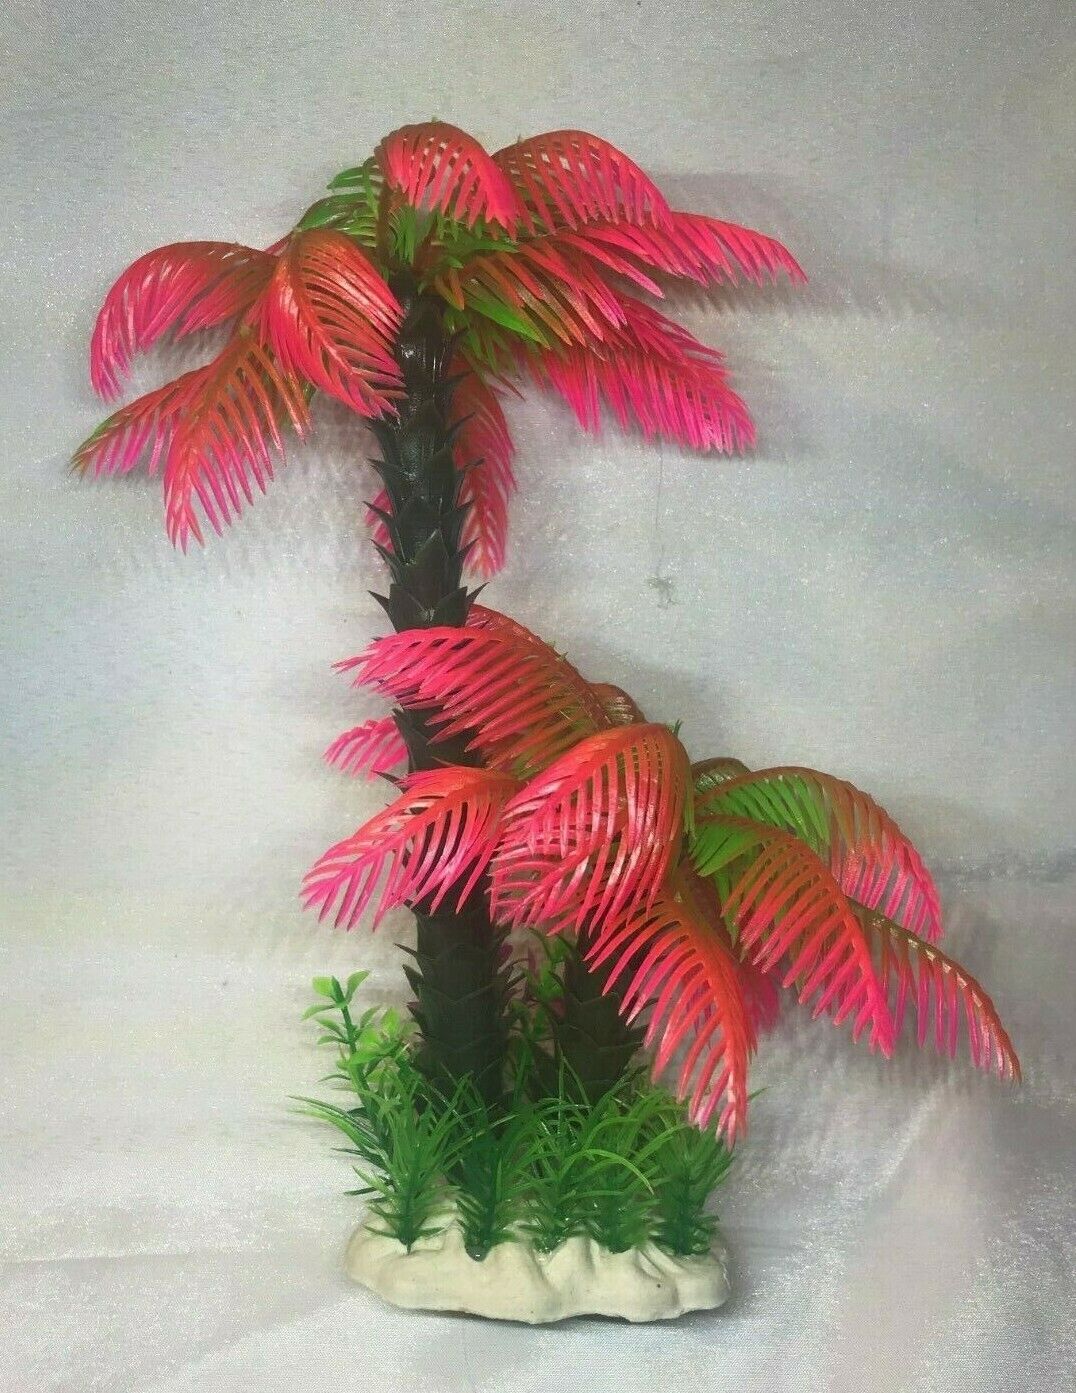 Artificial Plastic Aquarium plants - Palm Tree plant - Different Designs